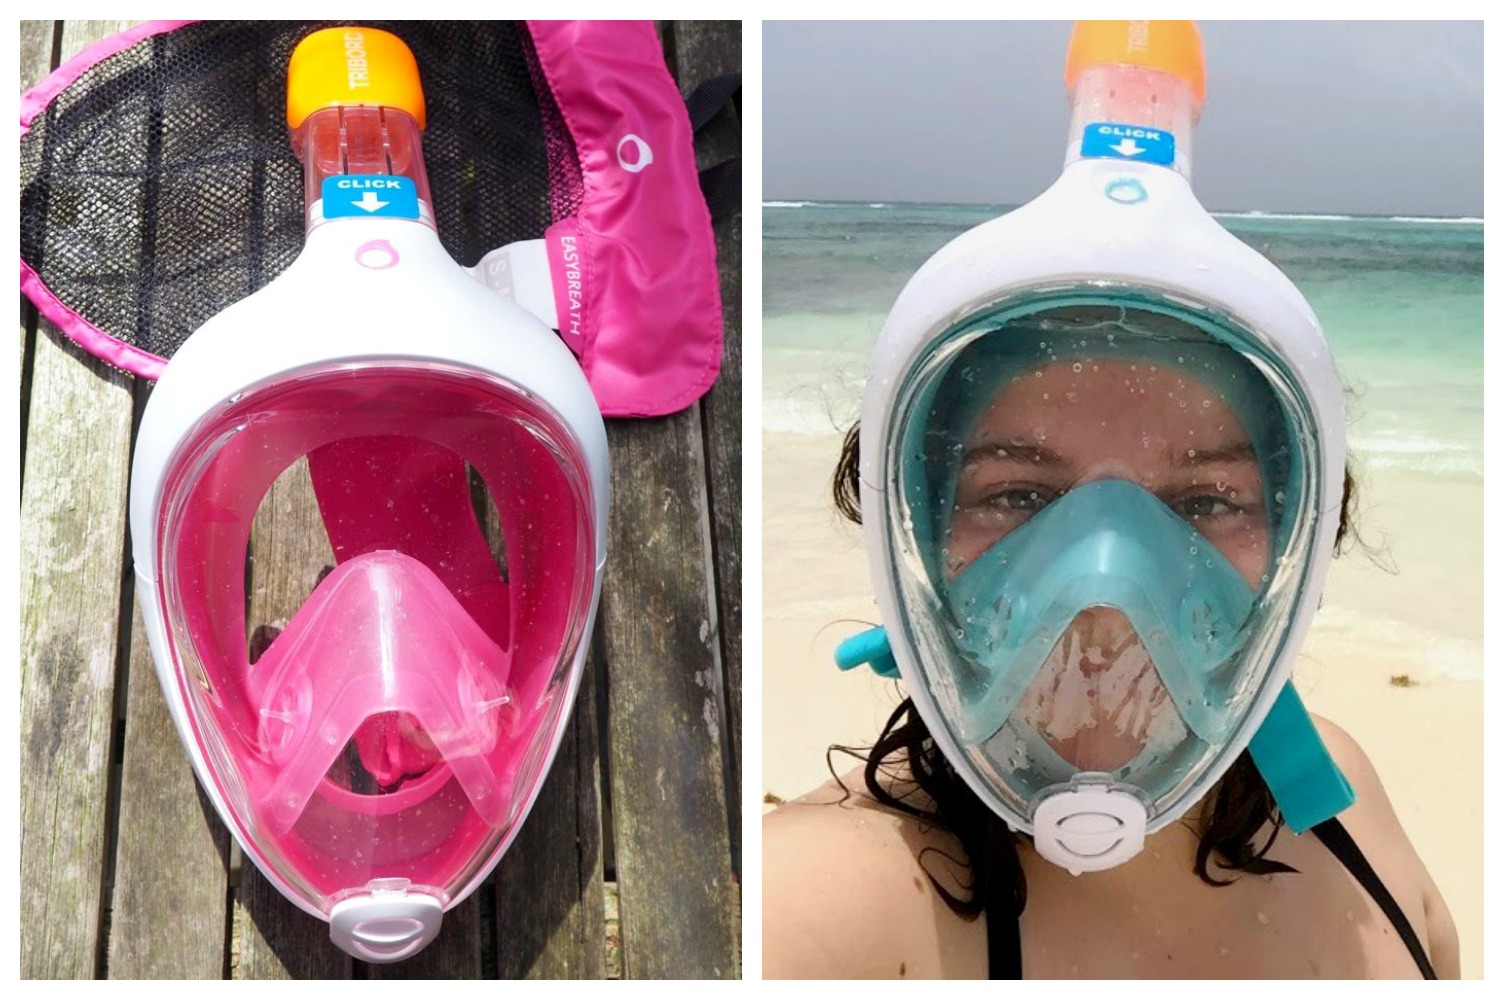 J'ai testé le masque Easybreath de Decathlon (snorkeling)